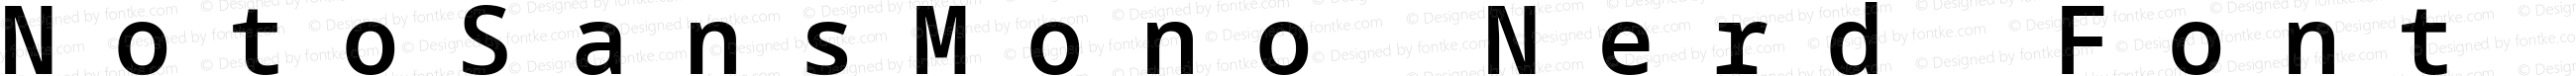 Noto Sans Mono SemiBold Nerd Font Complete Mono